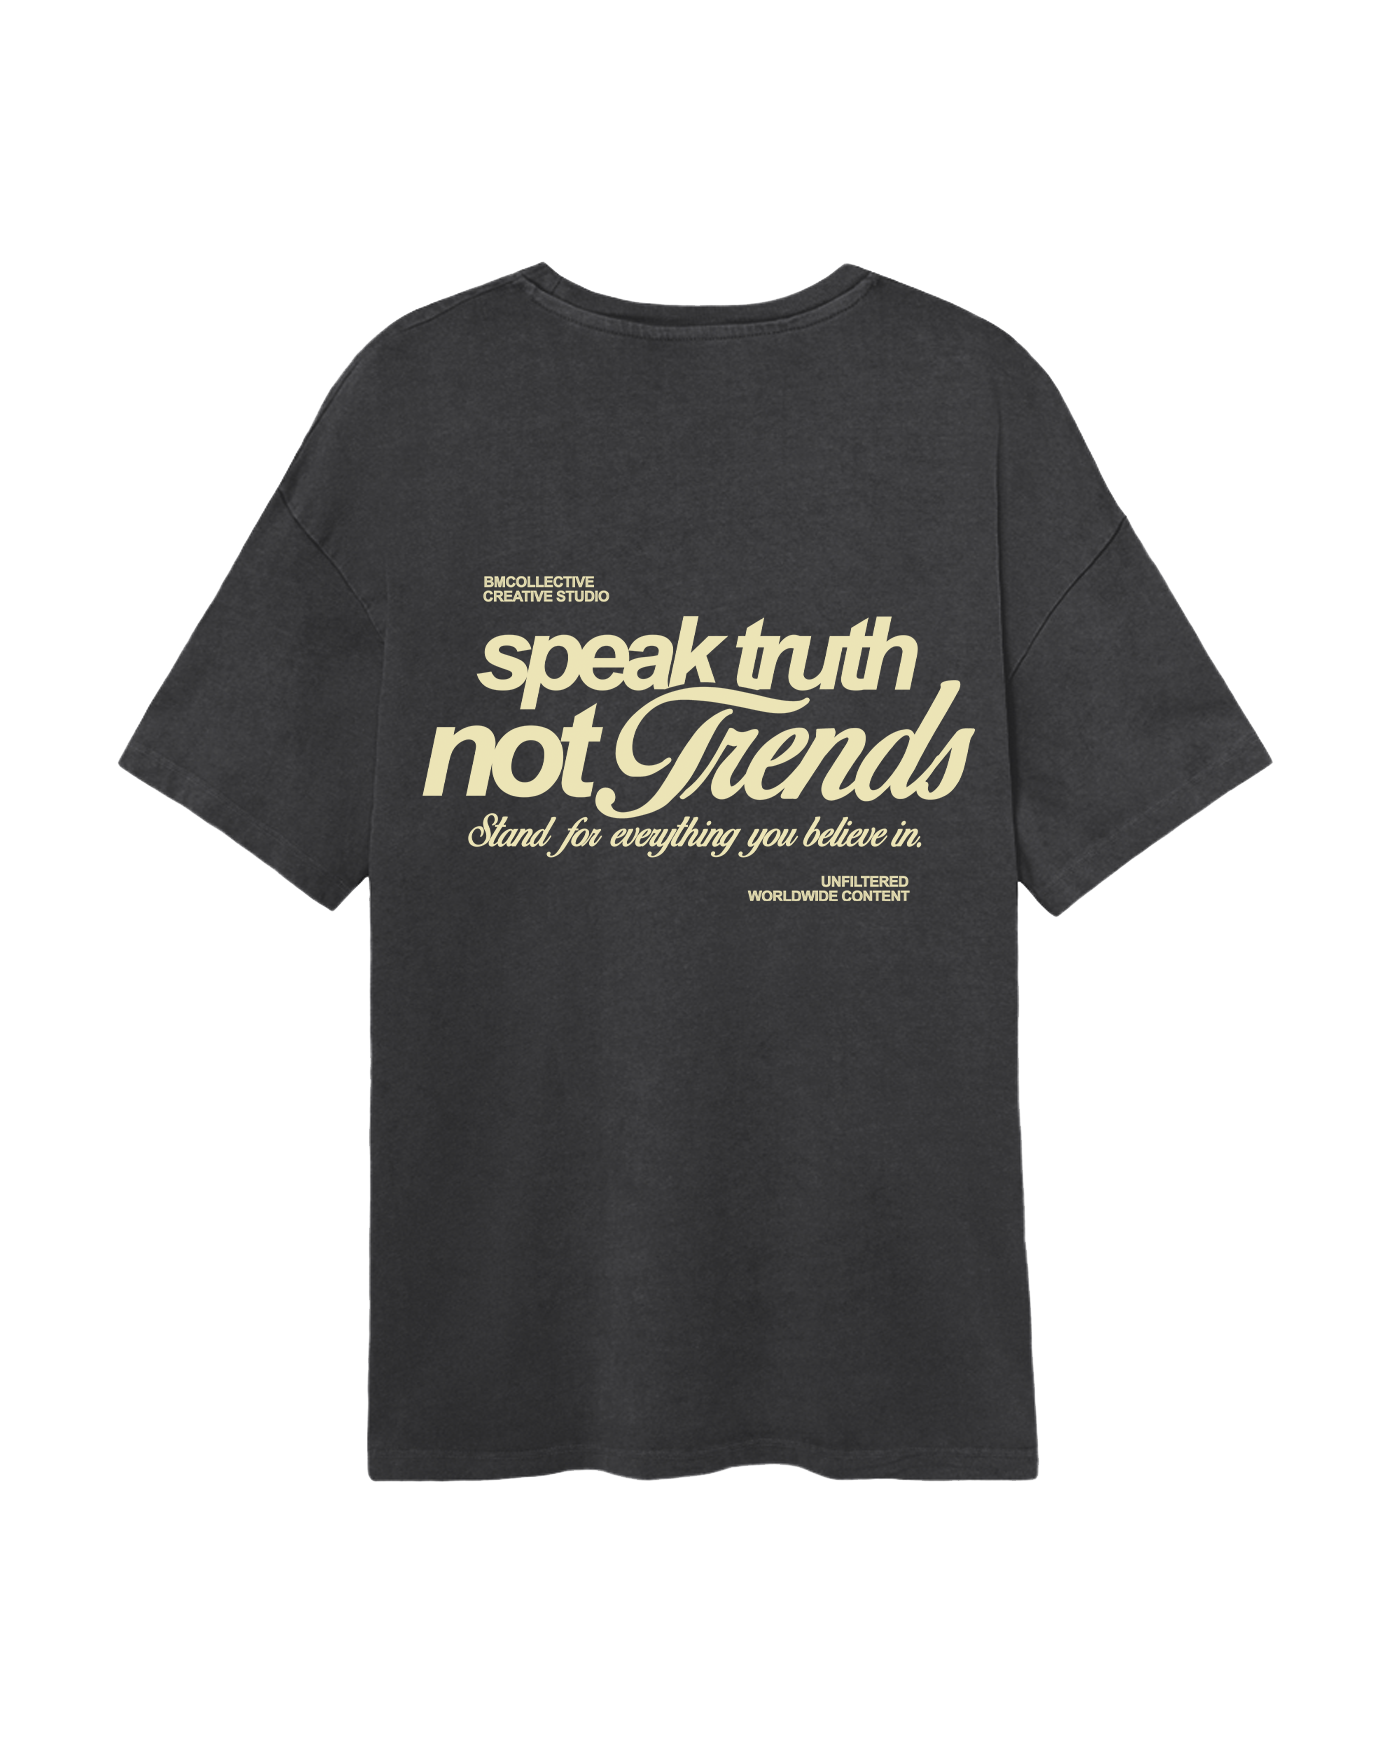 Speak Truth Not Trends Dark Grey Tee